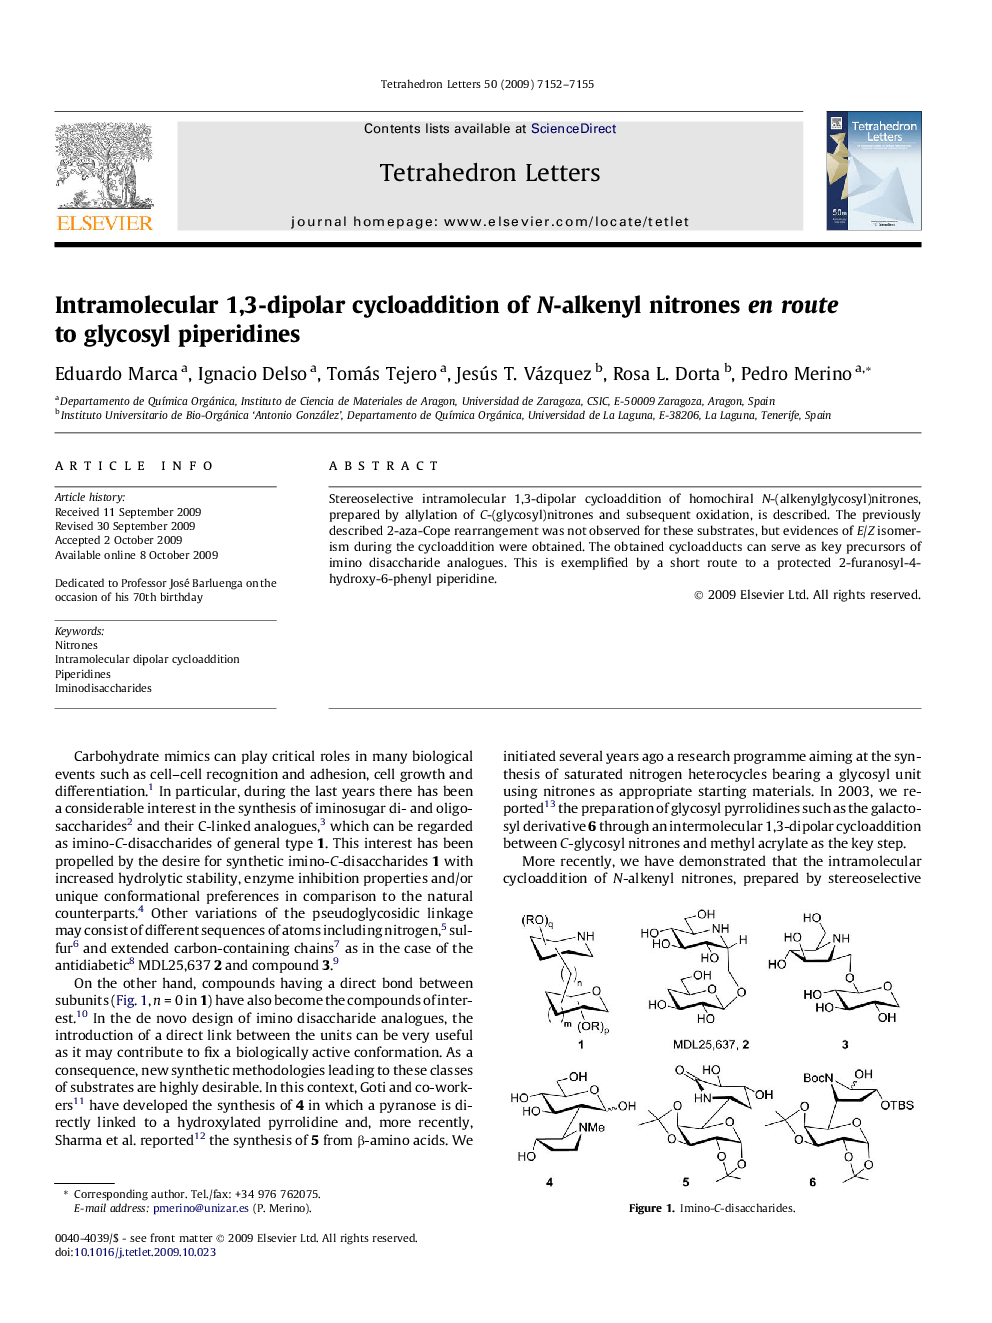 Intramolecular 1,3-dipolar cycloaddition of N-alkenyl nitrones en route to glycosyl piperidines